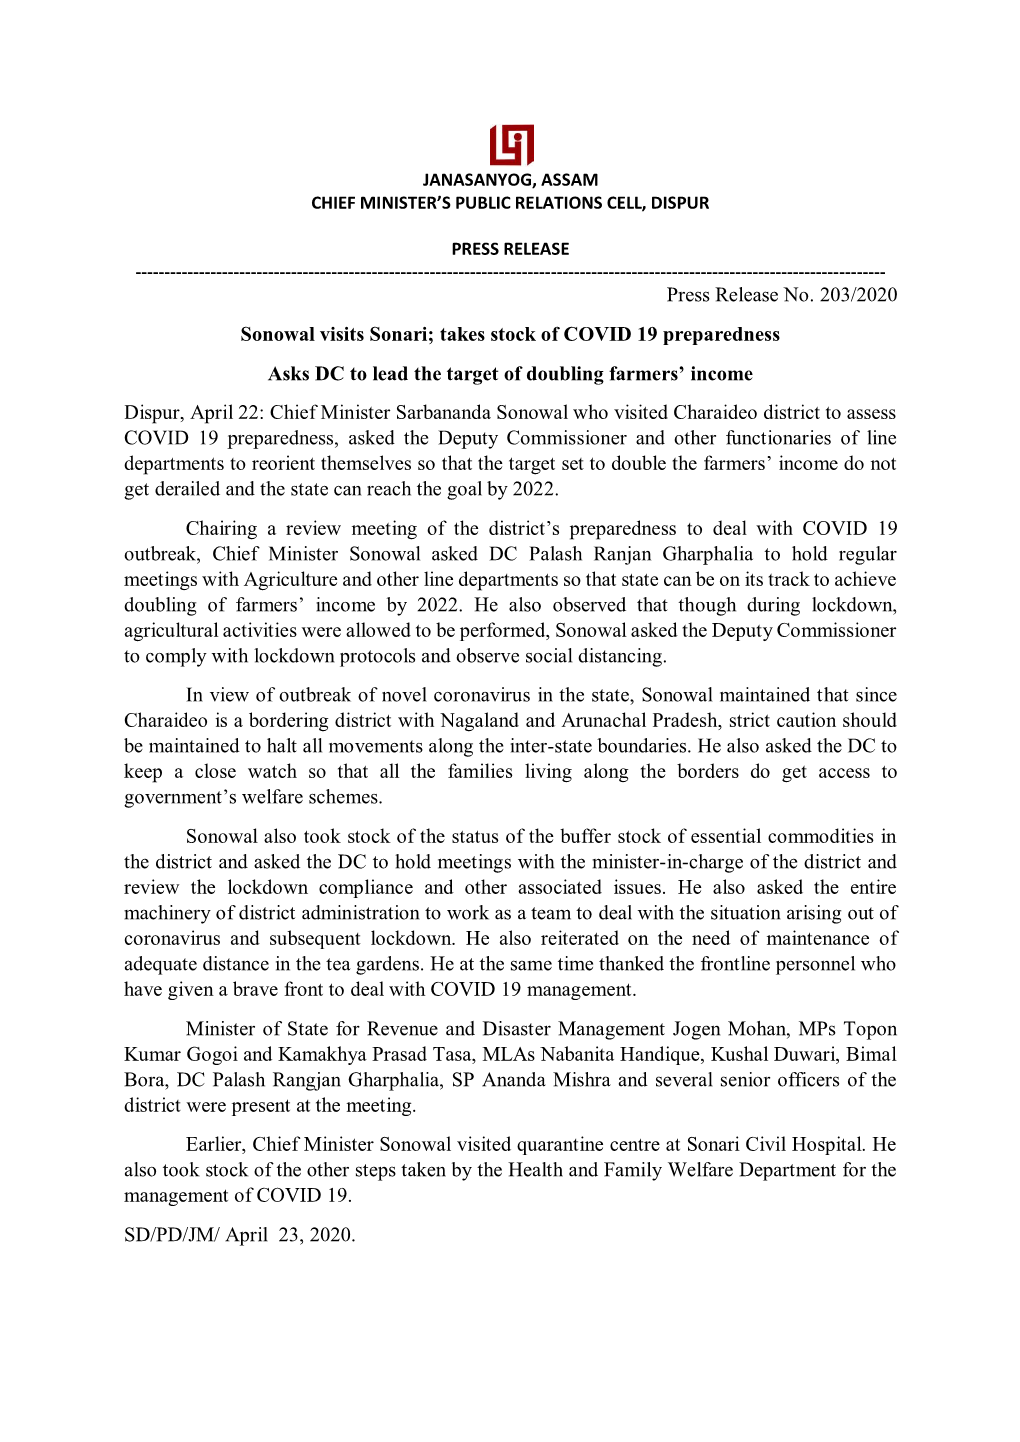 Press Release No. 203/2020 Sonowal Visits Sonari